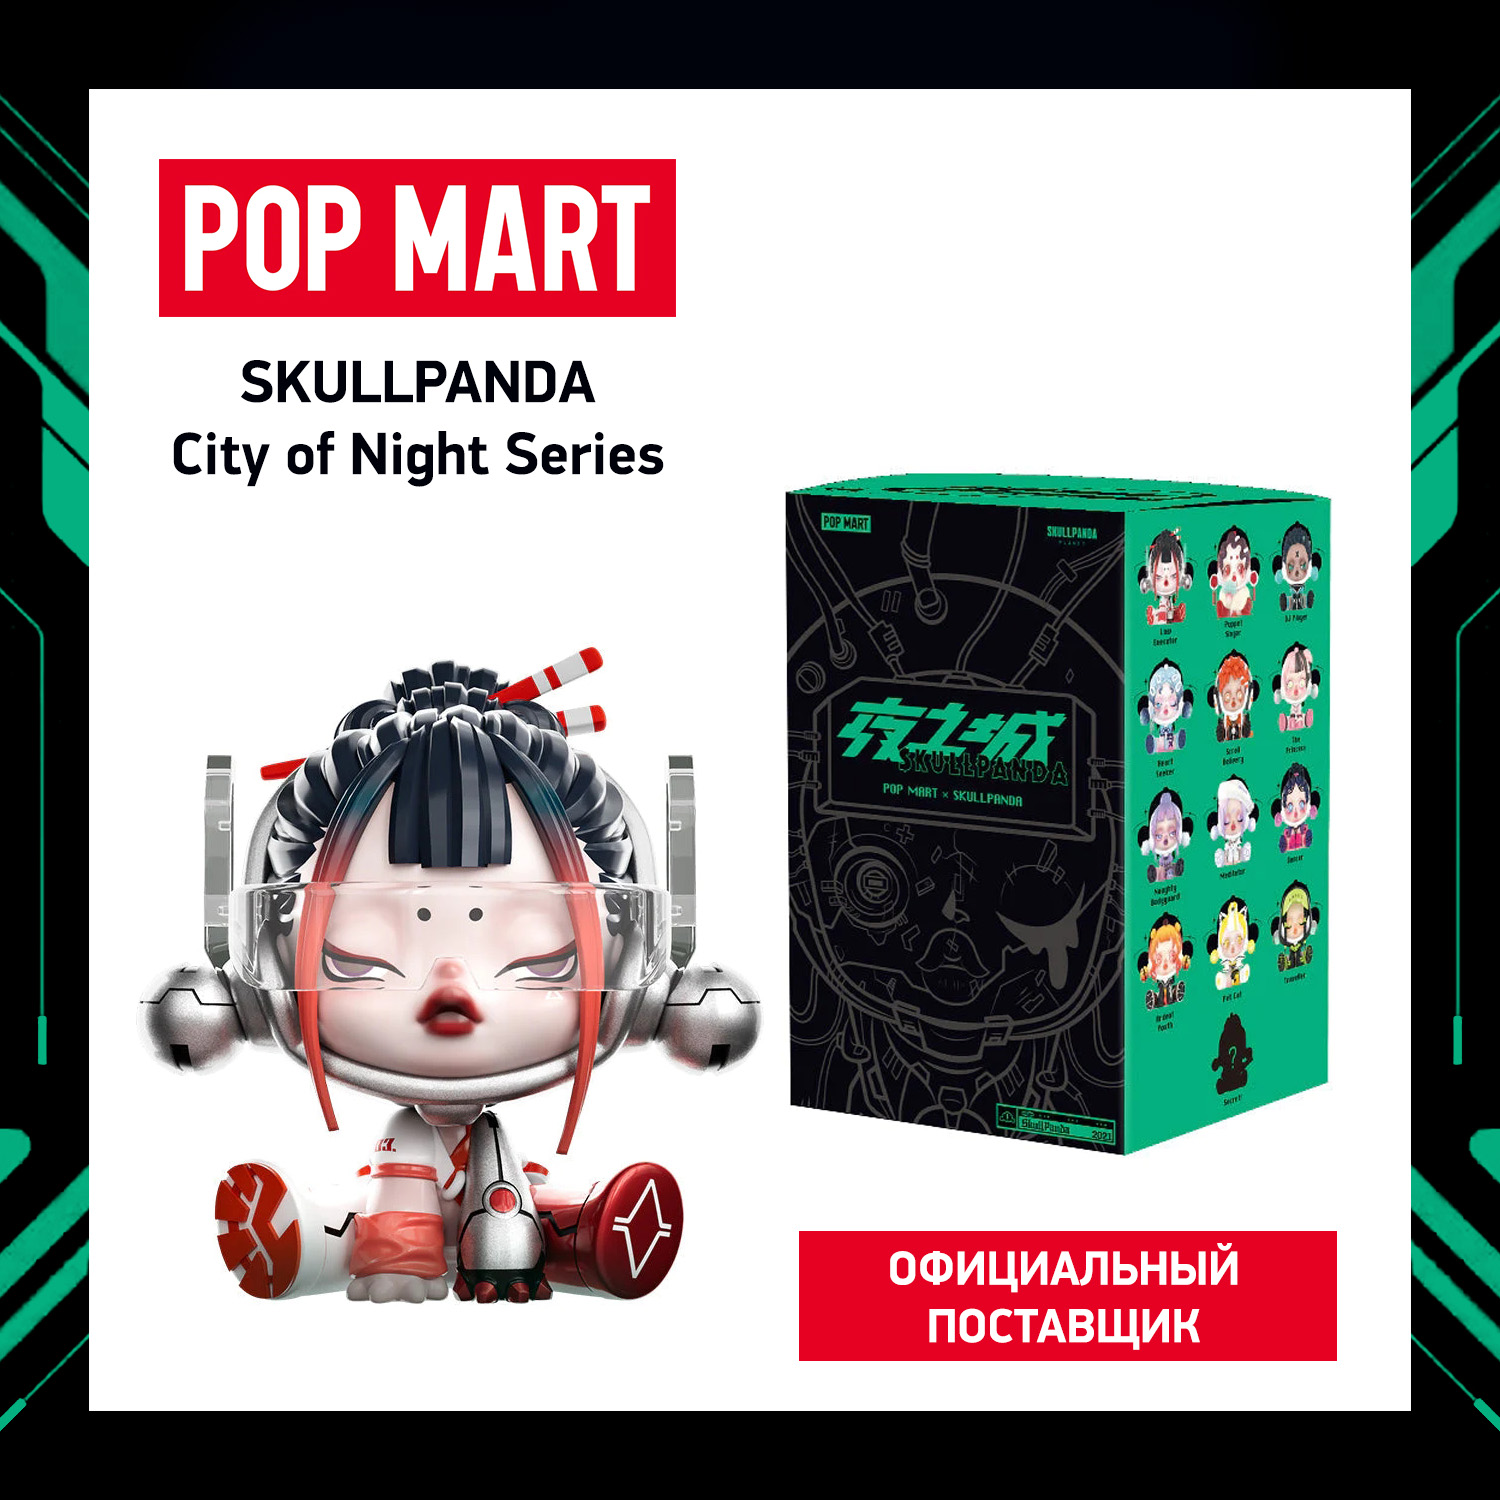 Коллекционная фигурка Pop Mart Skullpanda City of Night